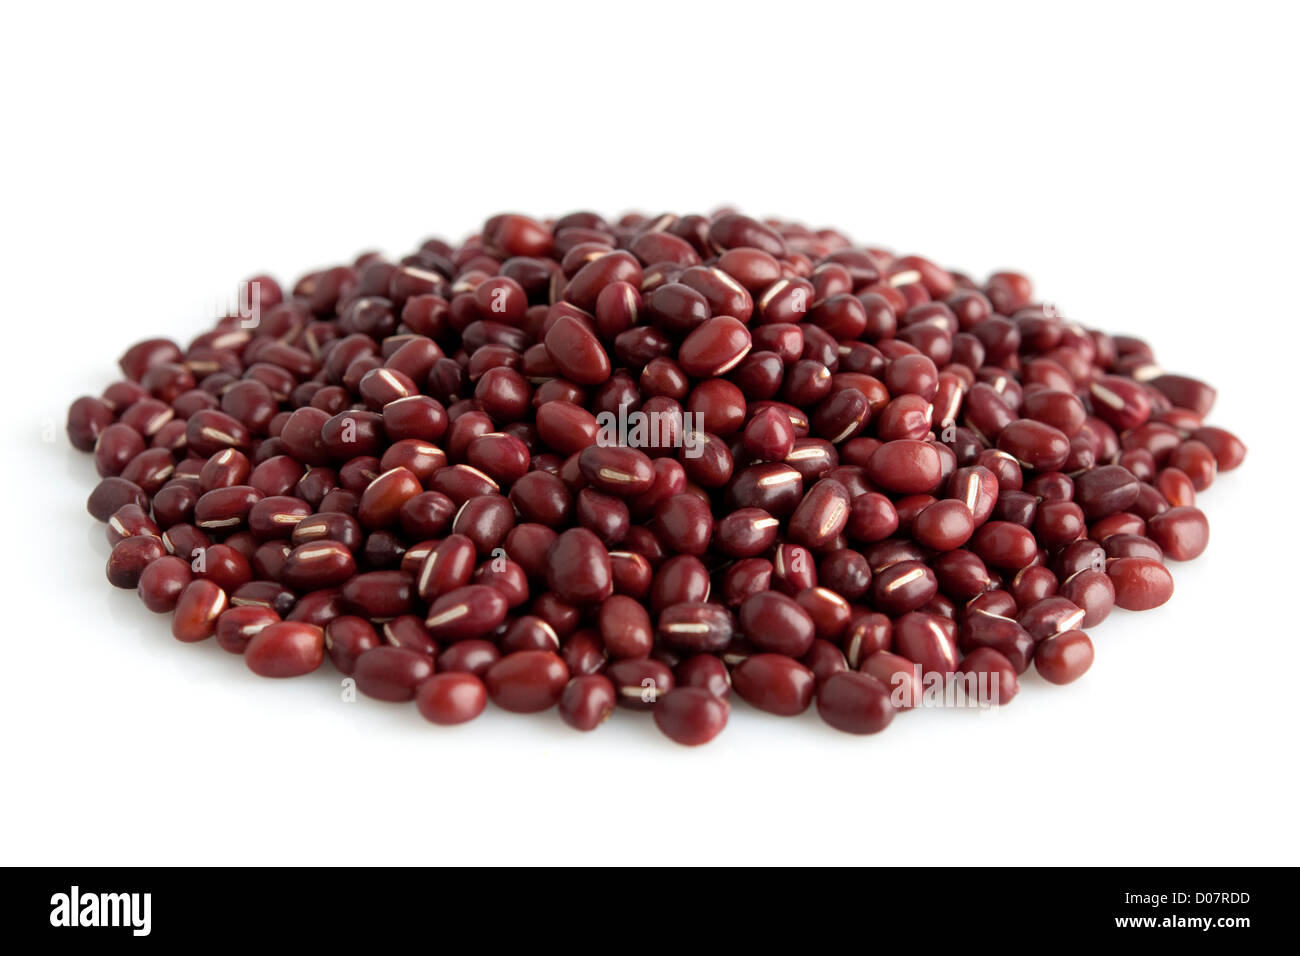 Organic Dried Adzuki Beans on white background Stock Photo